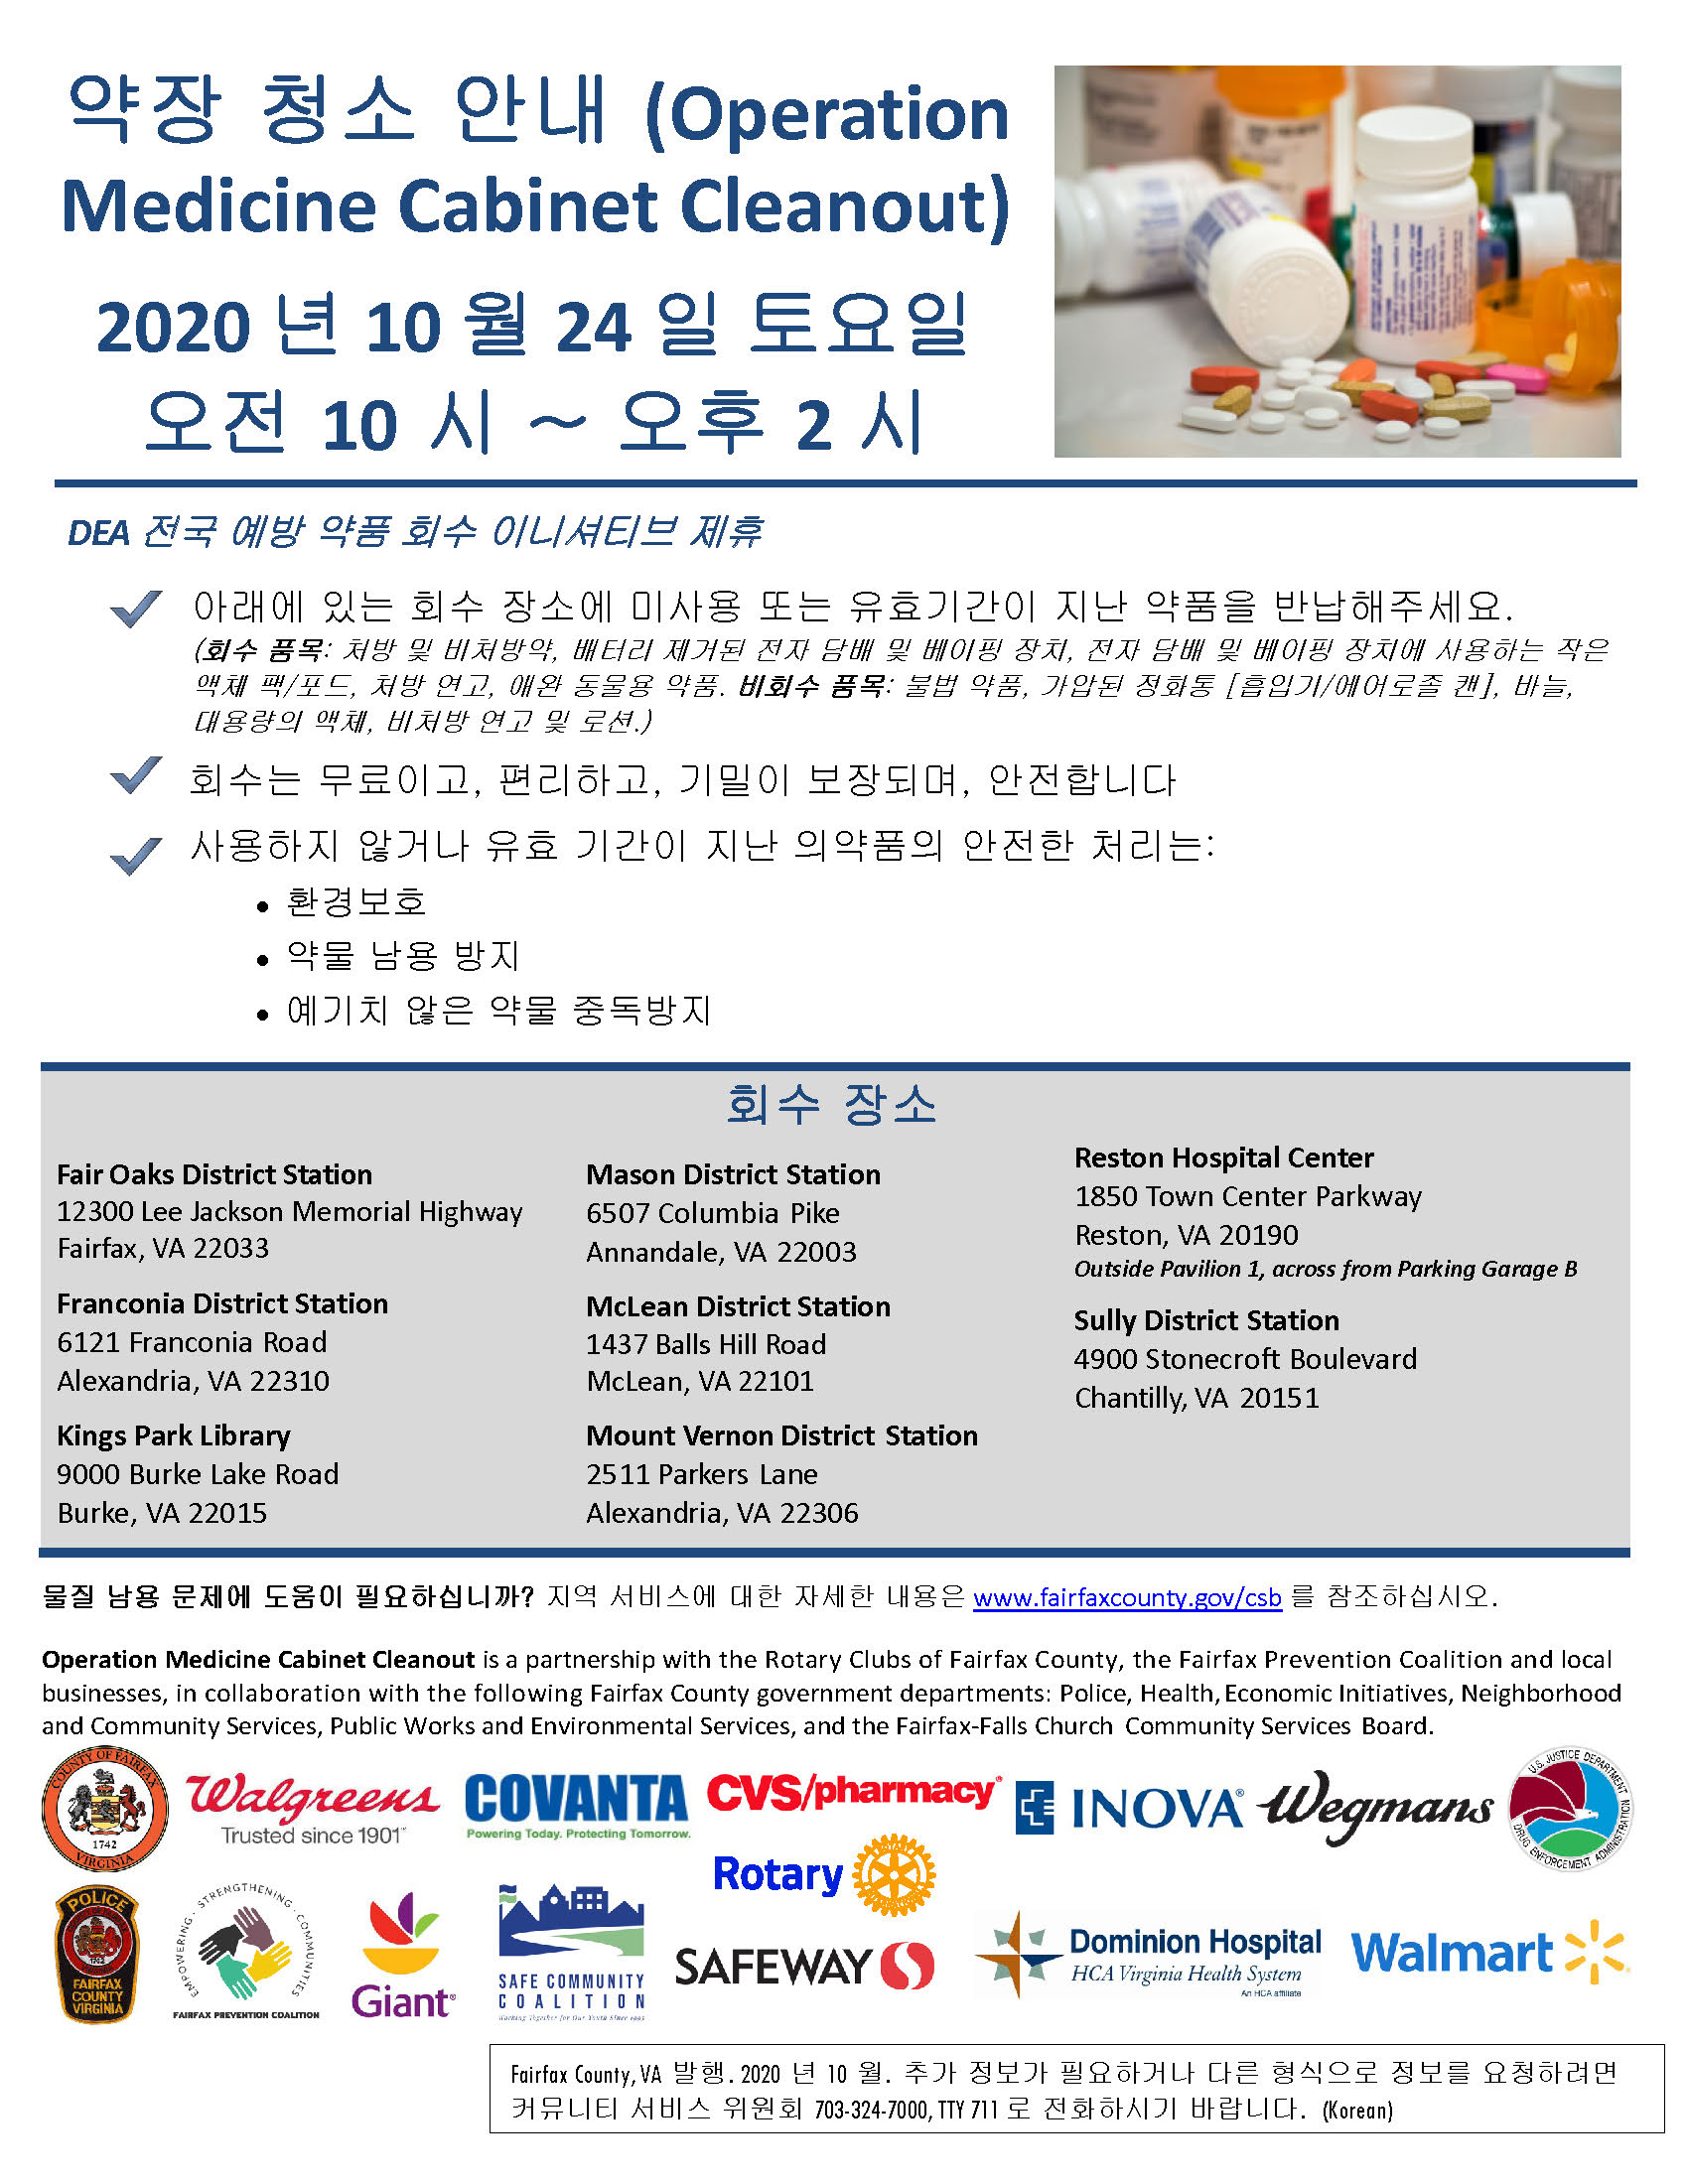 Operation Medicine Cabinet Cleanout flyer - Korean